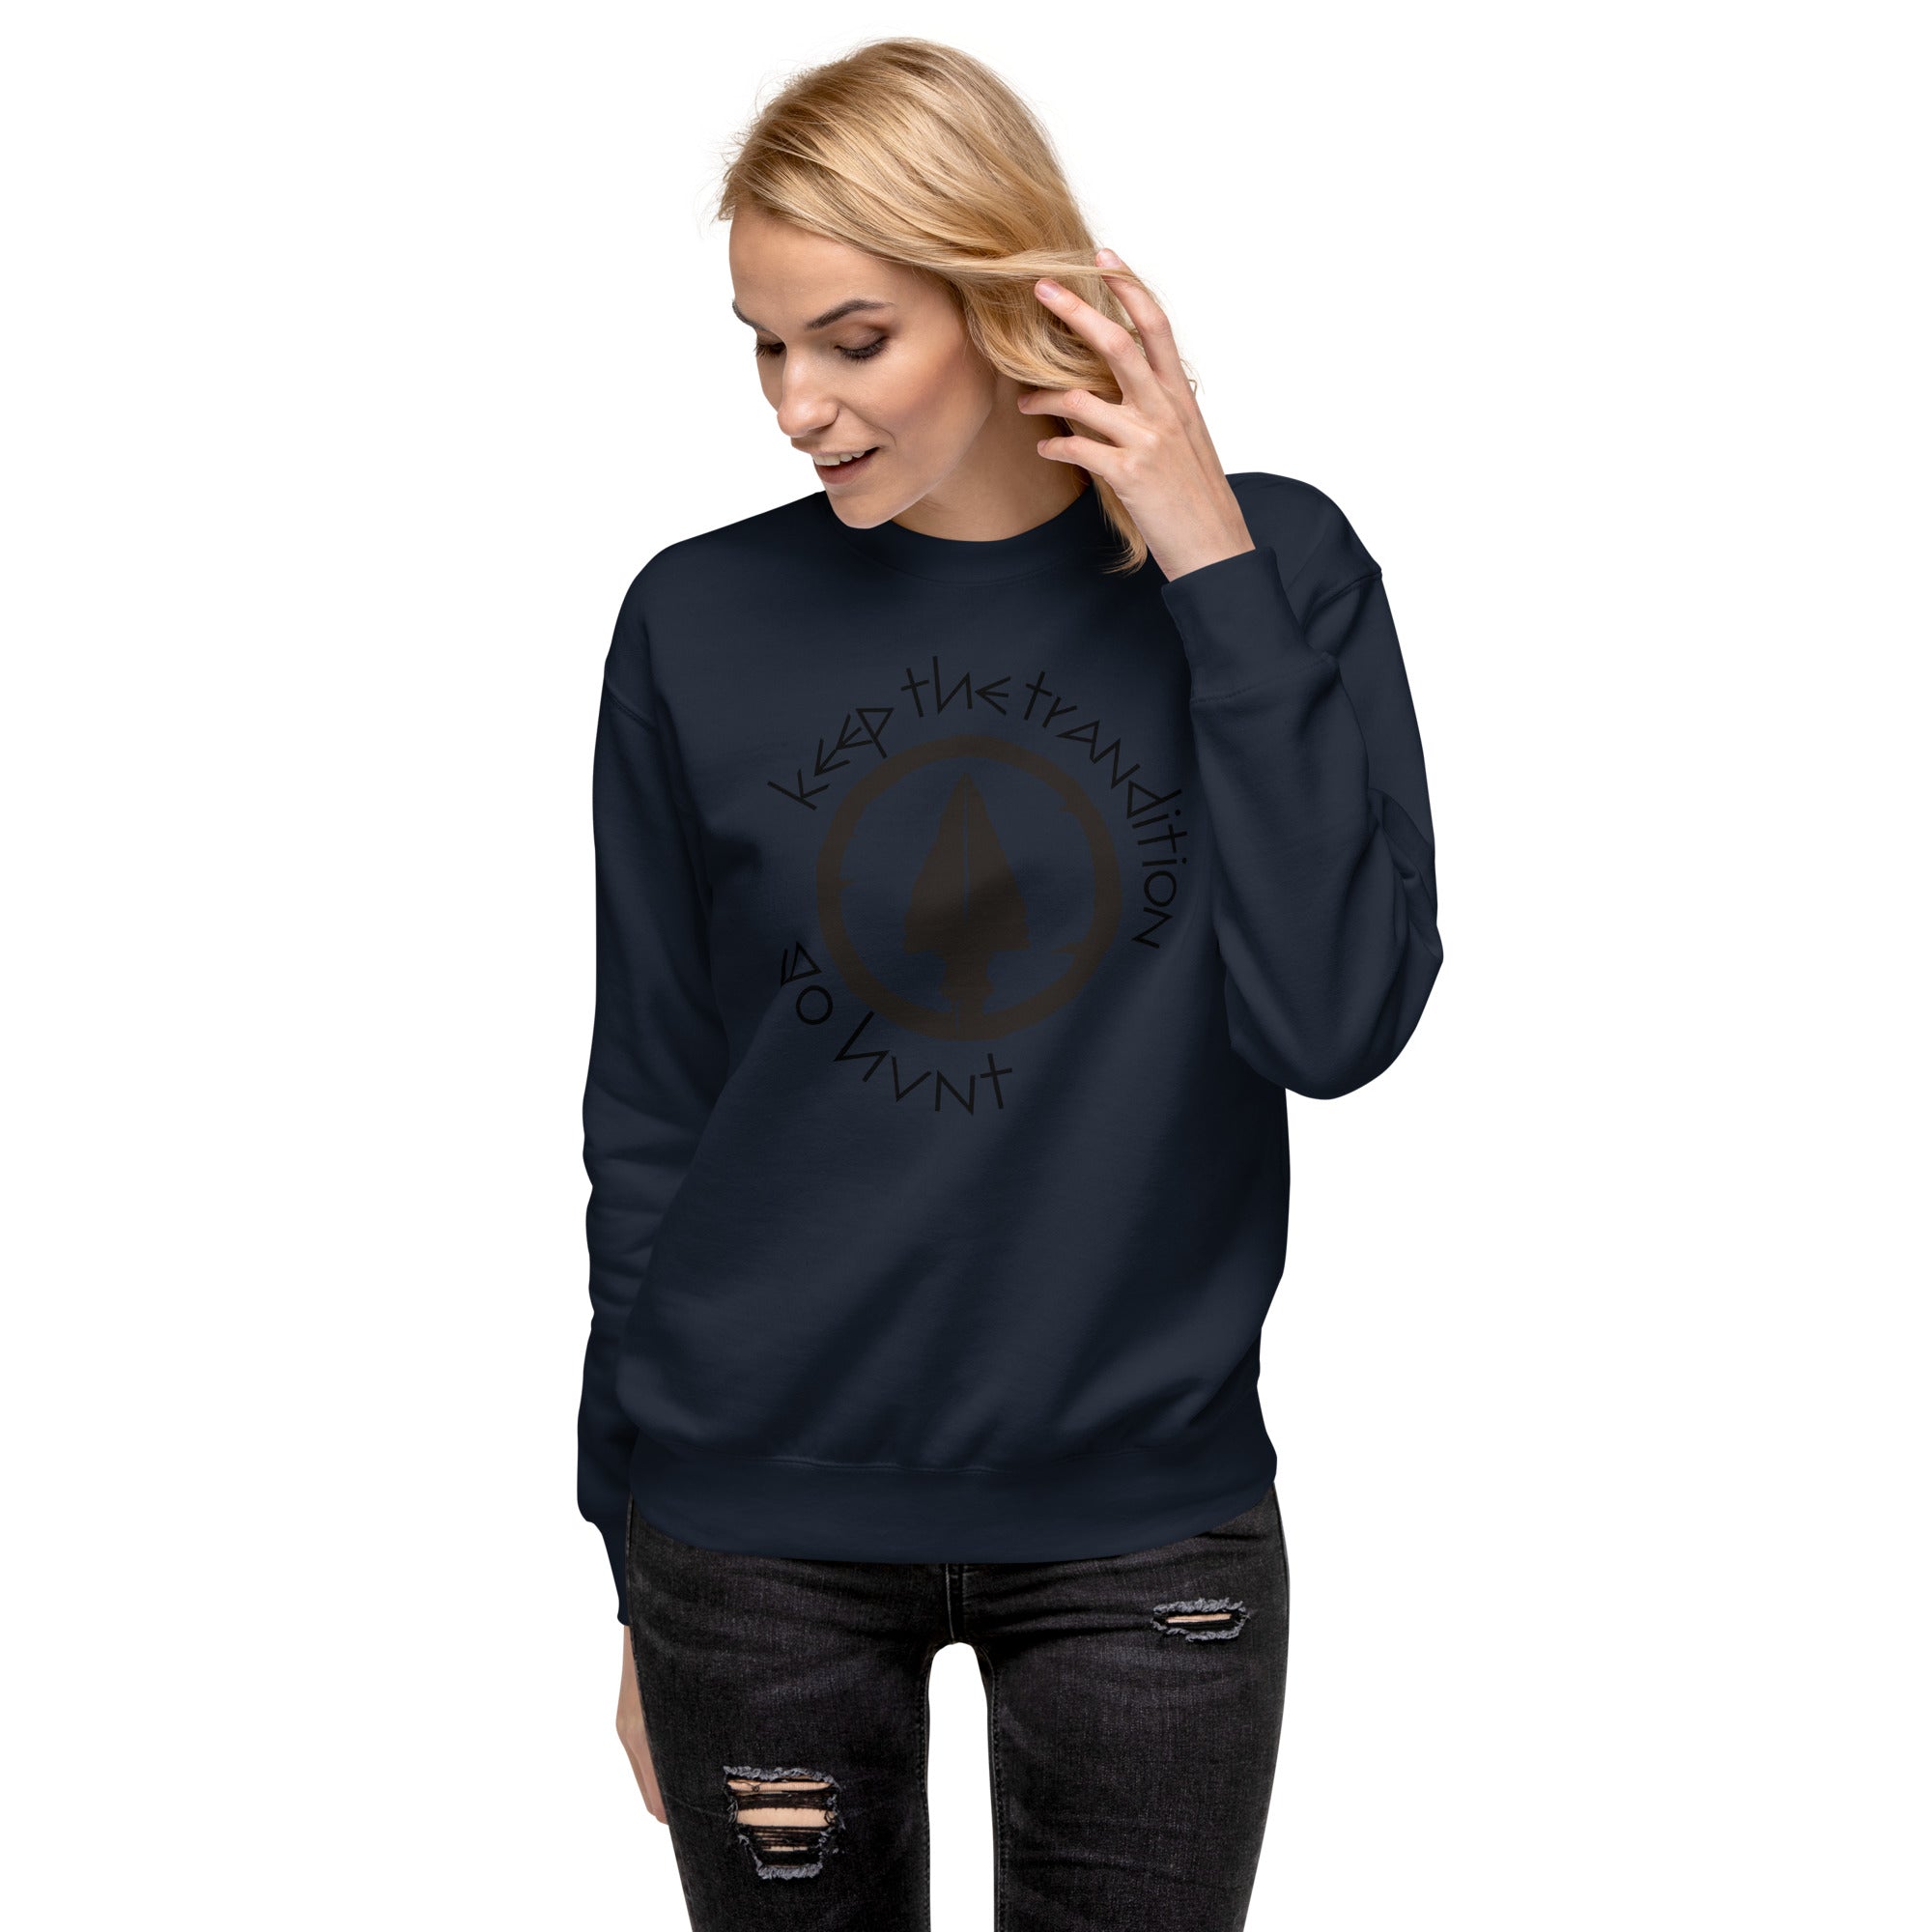 Keep The Tradition Women's Premium Sweatshirt - Go Hunt